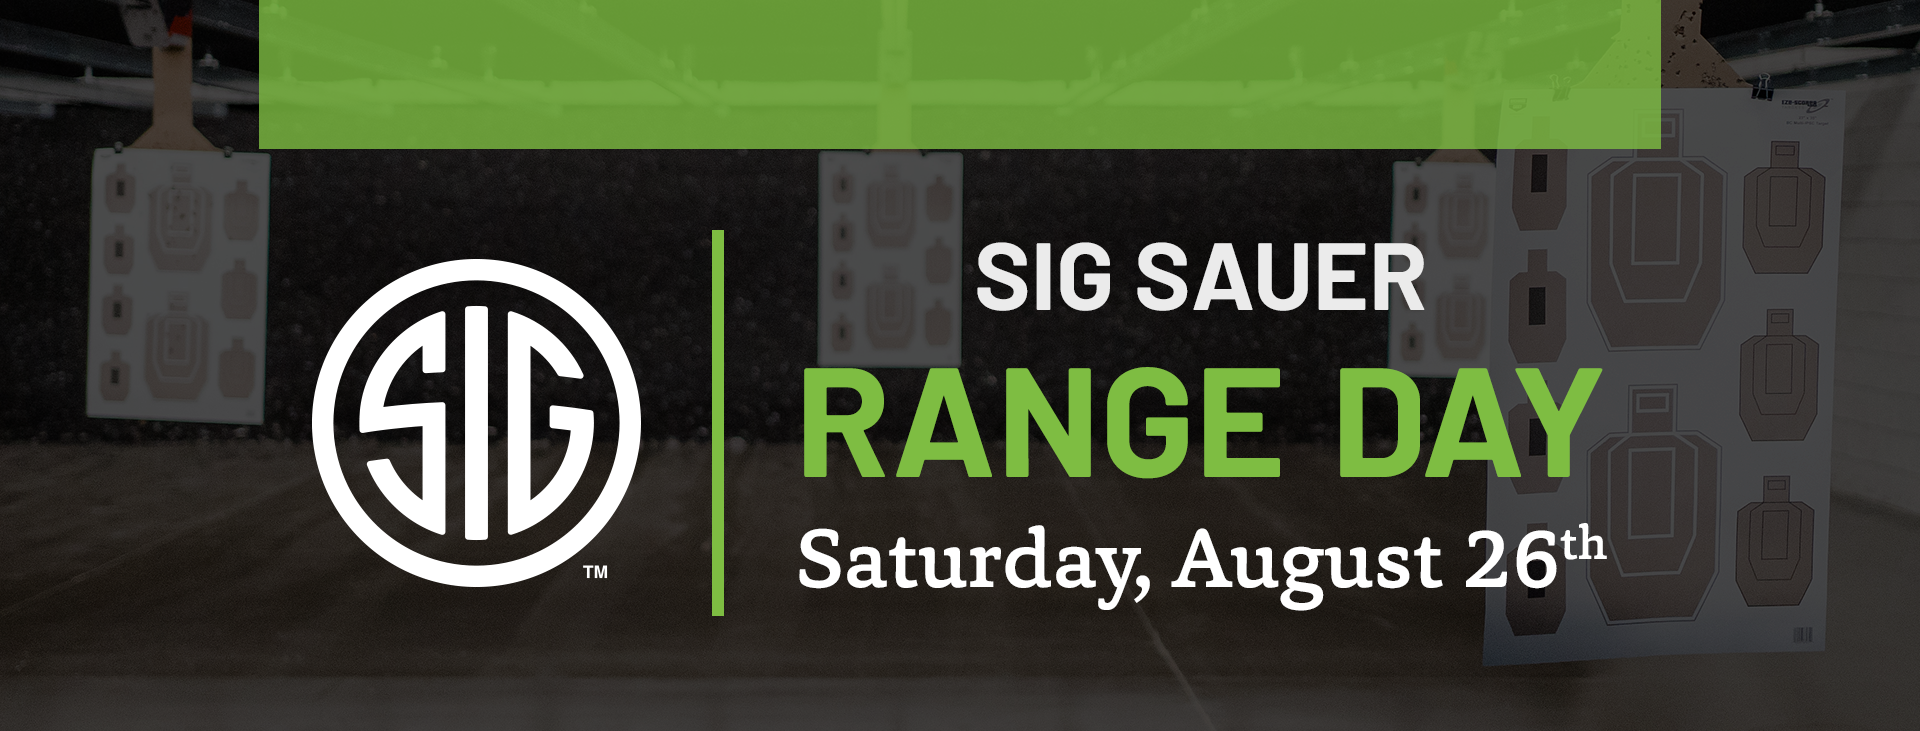 SIG range day